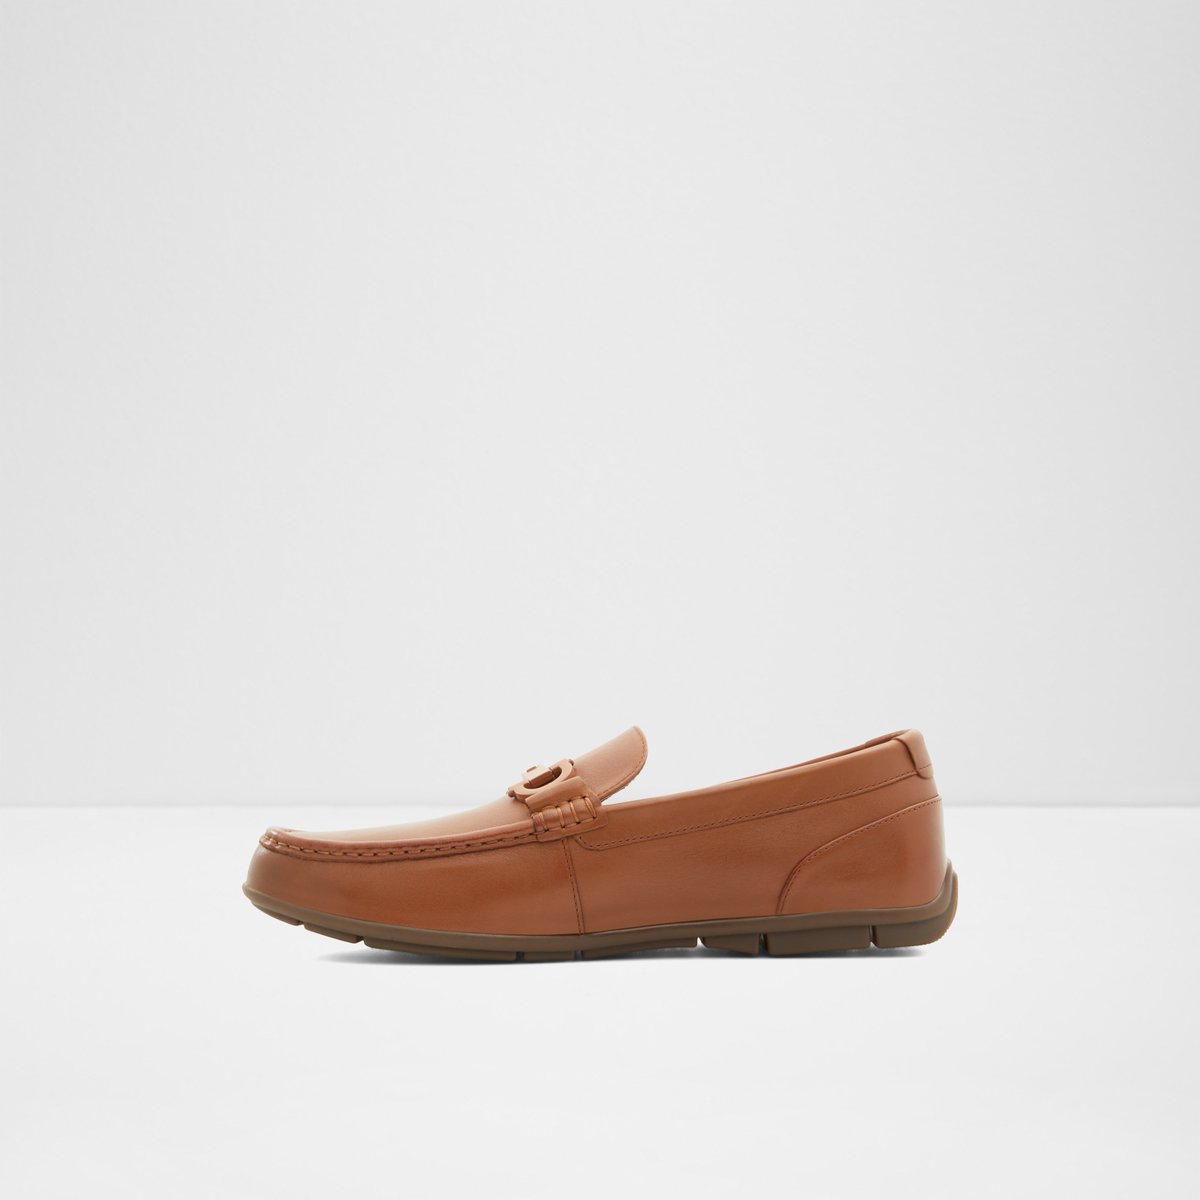 Buy Roadster Men Brown Textured PU Sneakers - Casual Shoes for Men